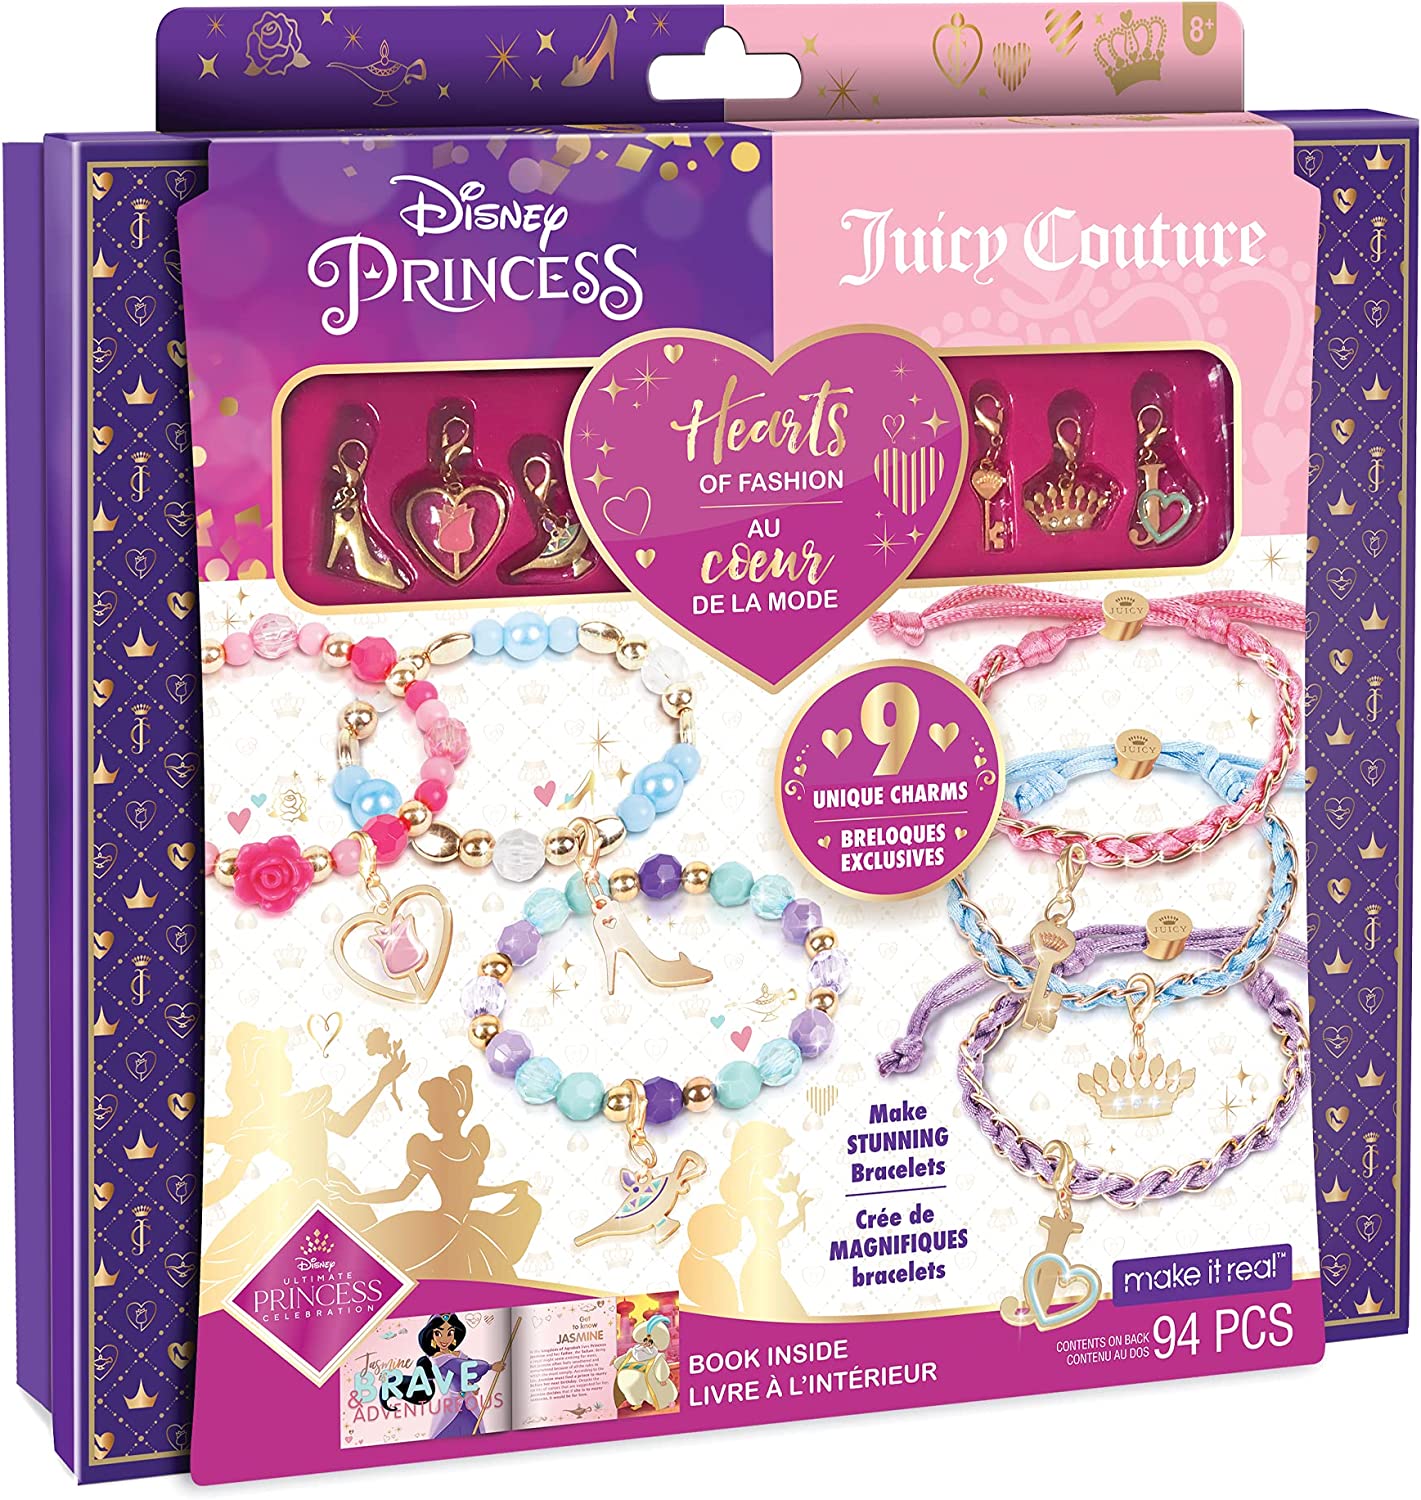  Make It Real Disney Princess 2 in 1 Deluxe Royal Jewels & Gems  - Disney Princess Craft Kit with Disney Charms & Beads - Disney Princess  Jewelry Making Kit for Girls